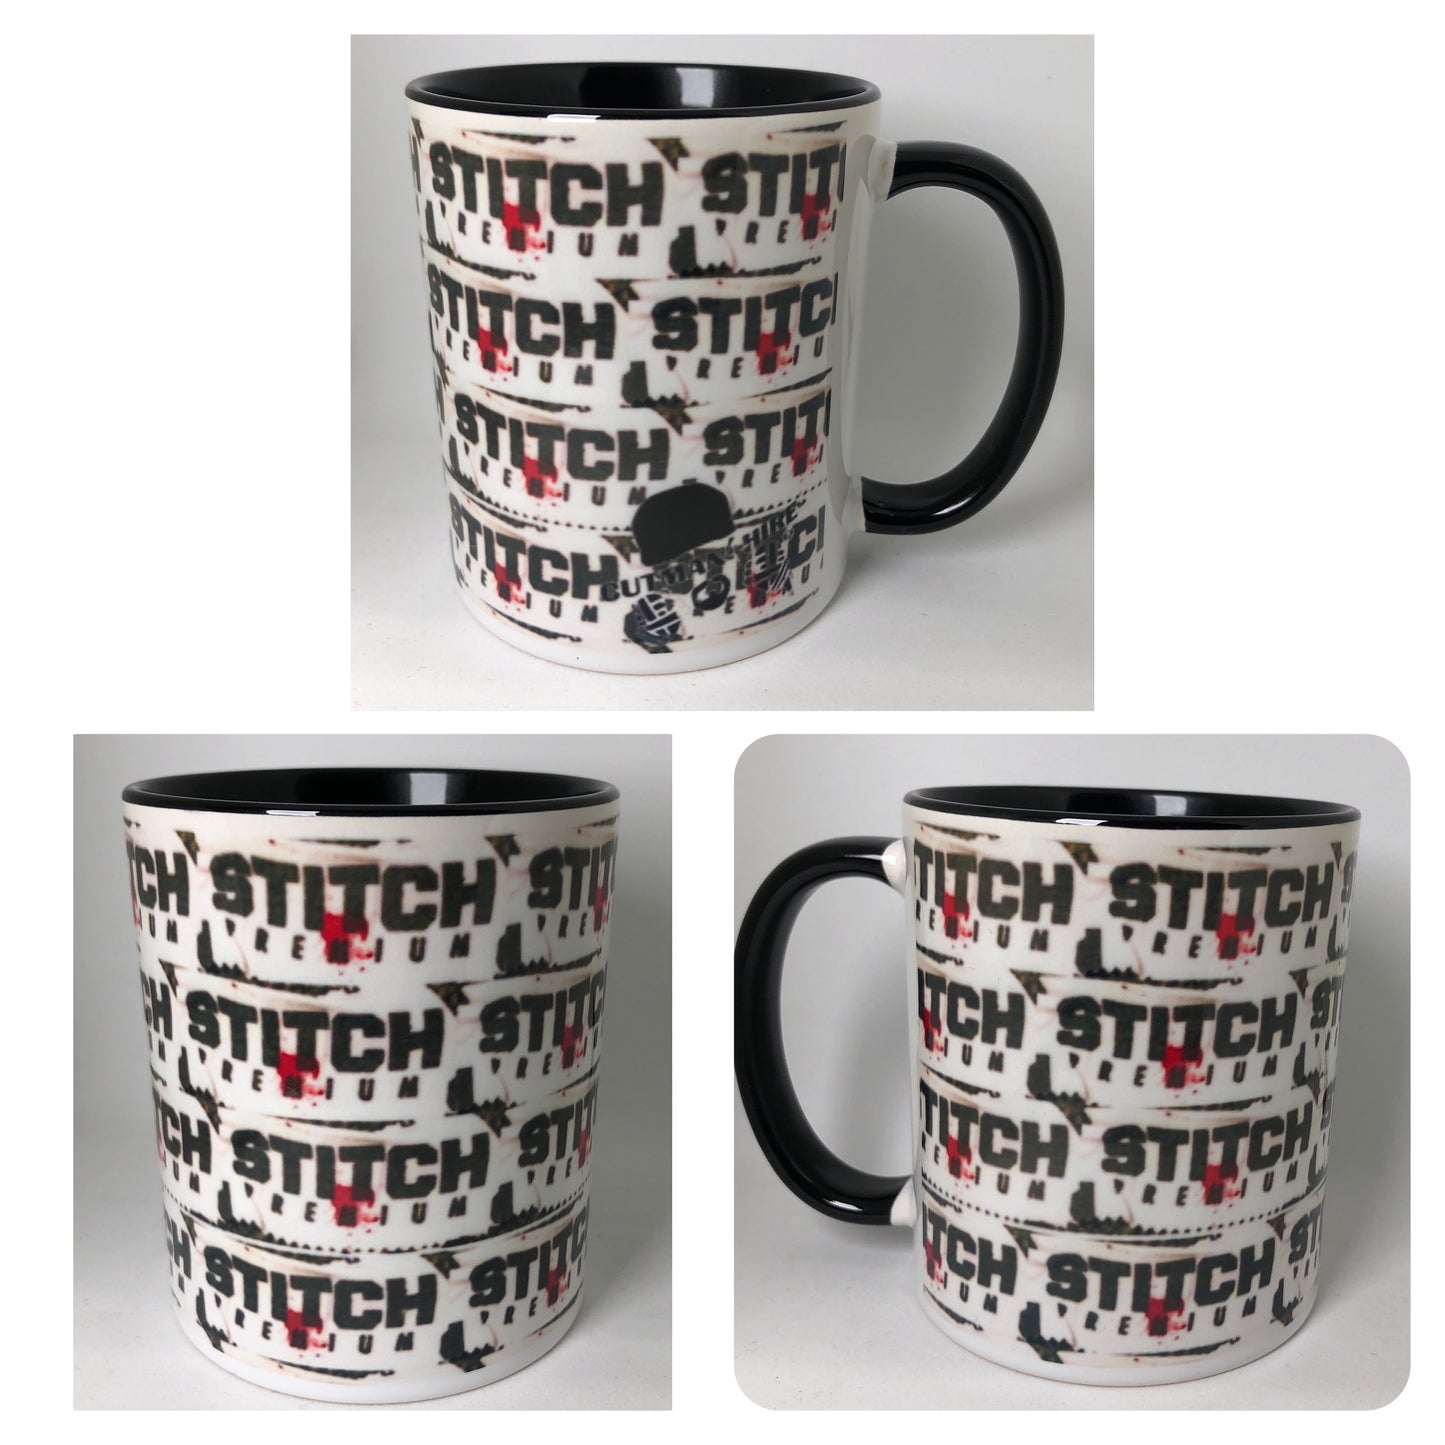 Stitch Coffee Mug (11 oz)